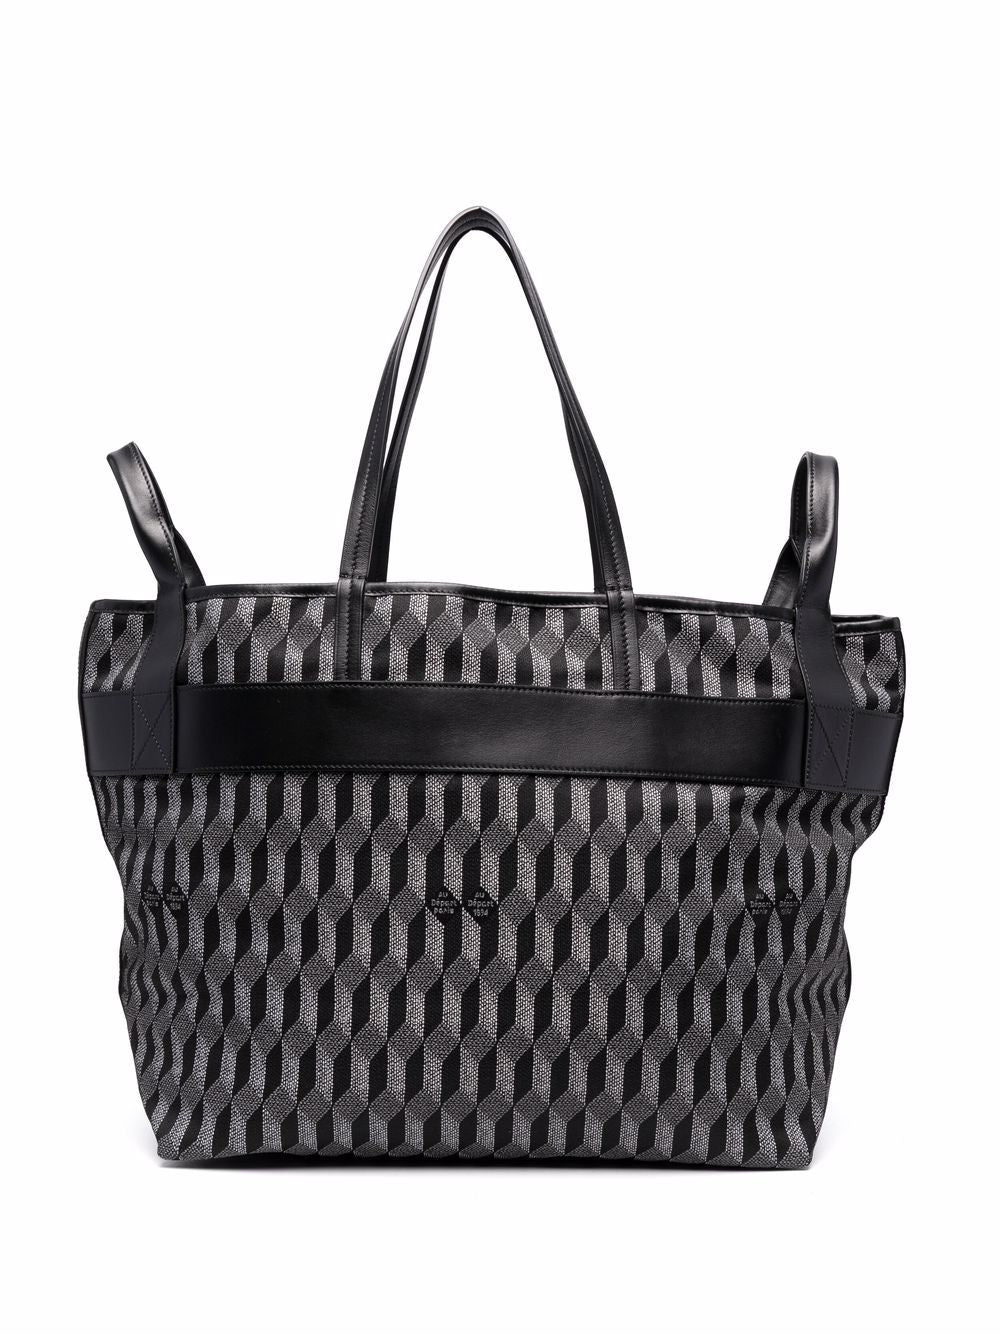 Tote bag with geometric pattern print